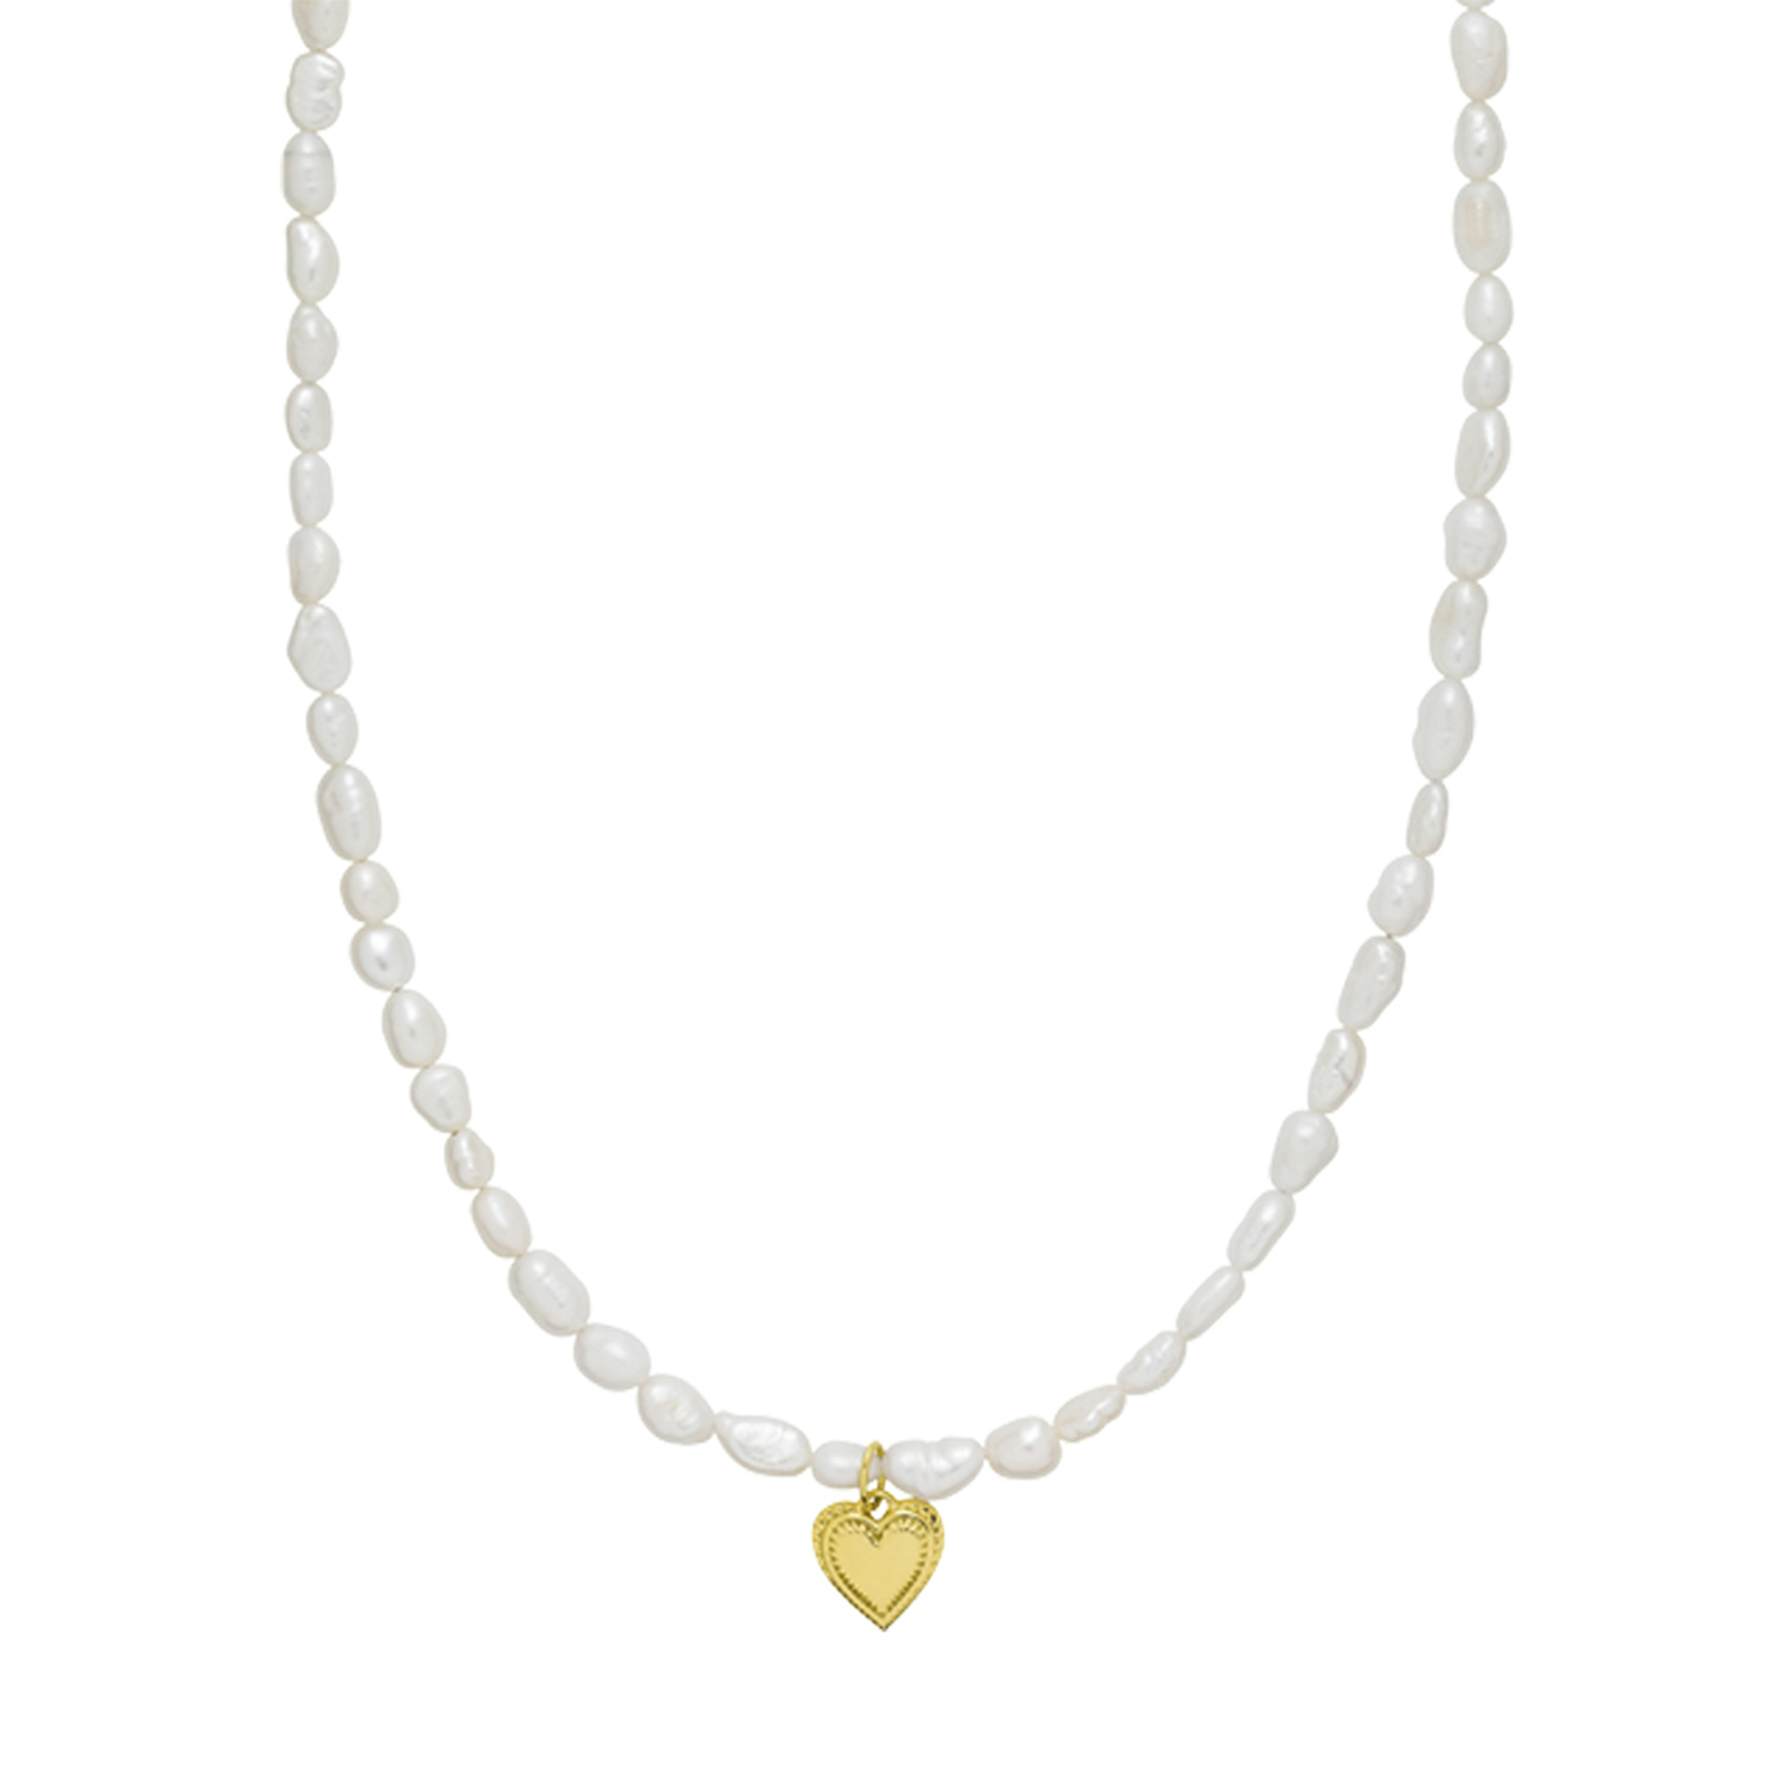 Anne-Sofie Krab x Sistie Heart Necklace fra Sistie i Forgylt-Sølv Sterling 925